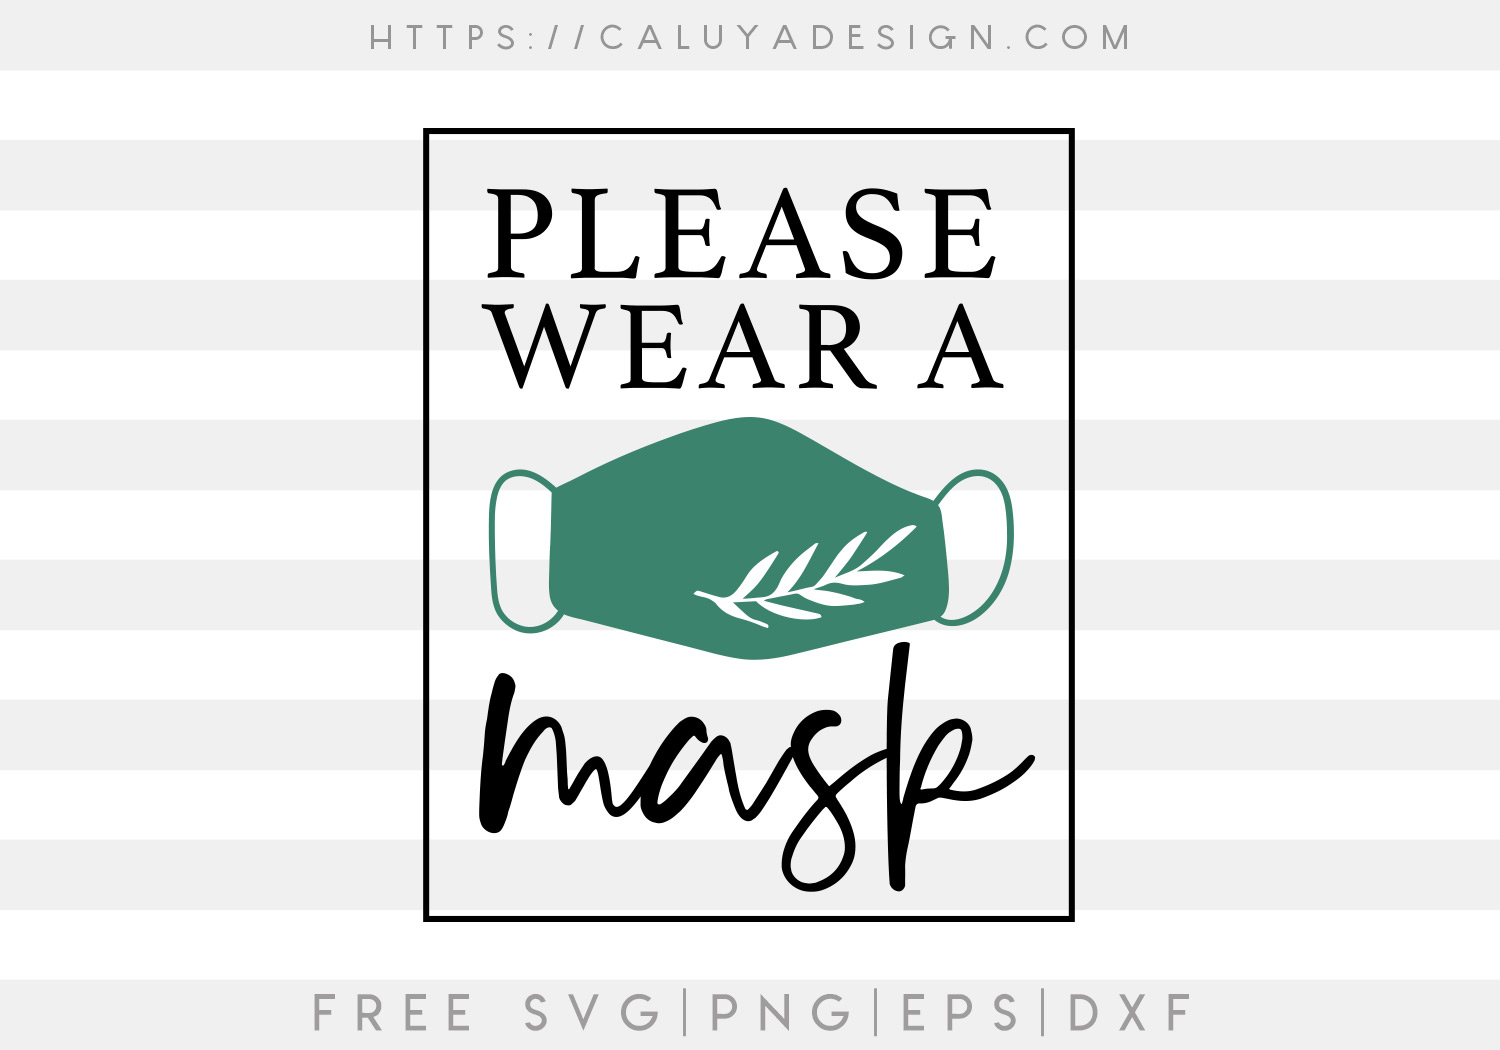 Wear A Mask SVG, PNG, EPS & DXF